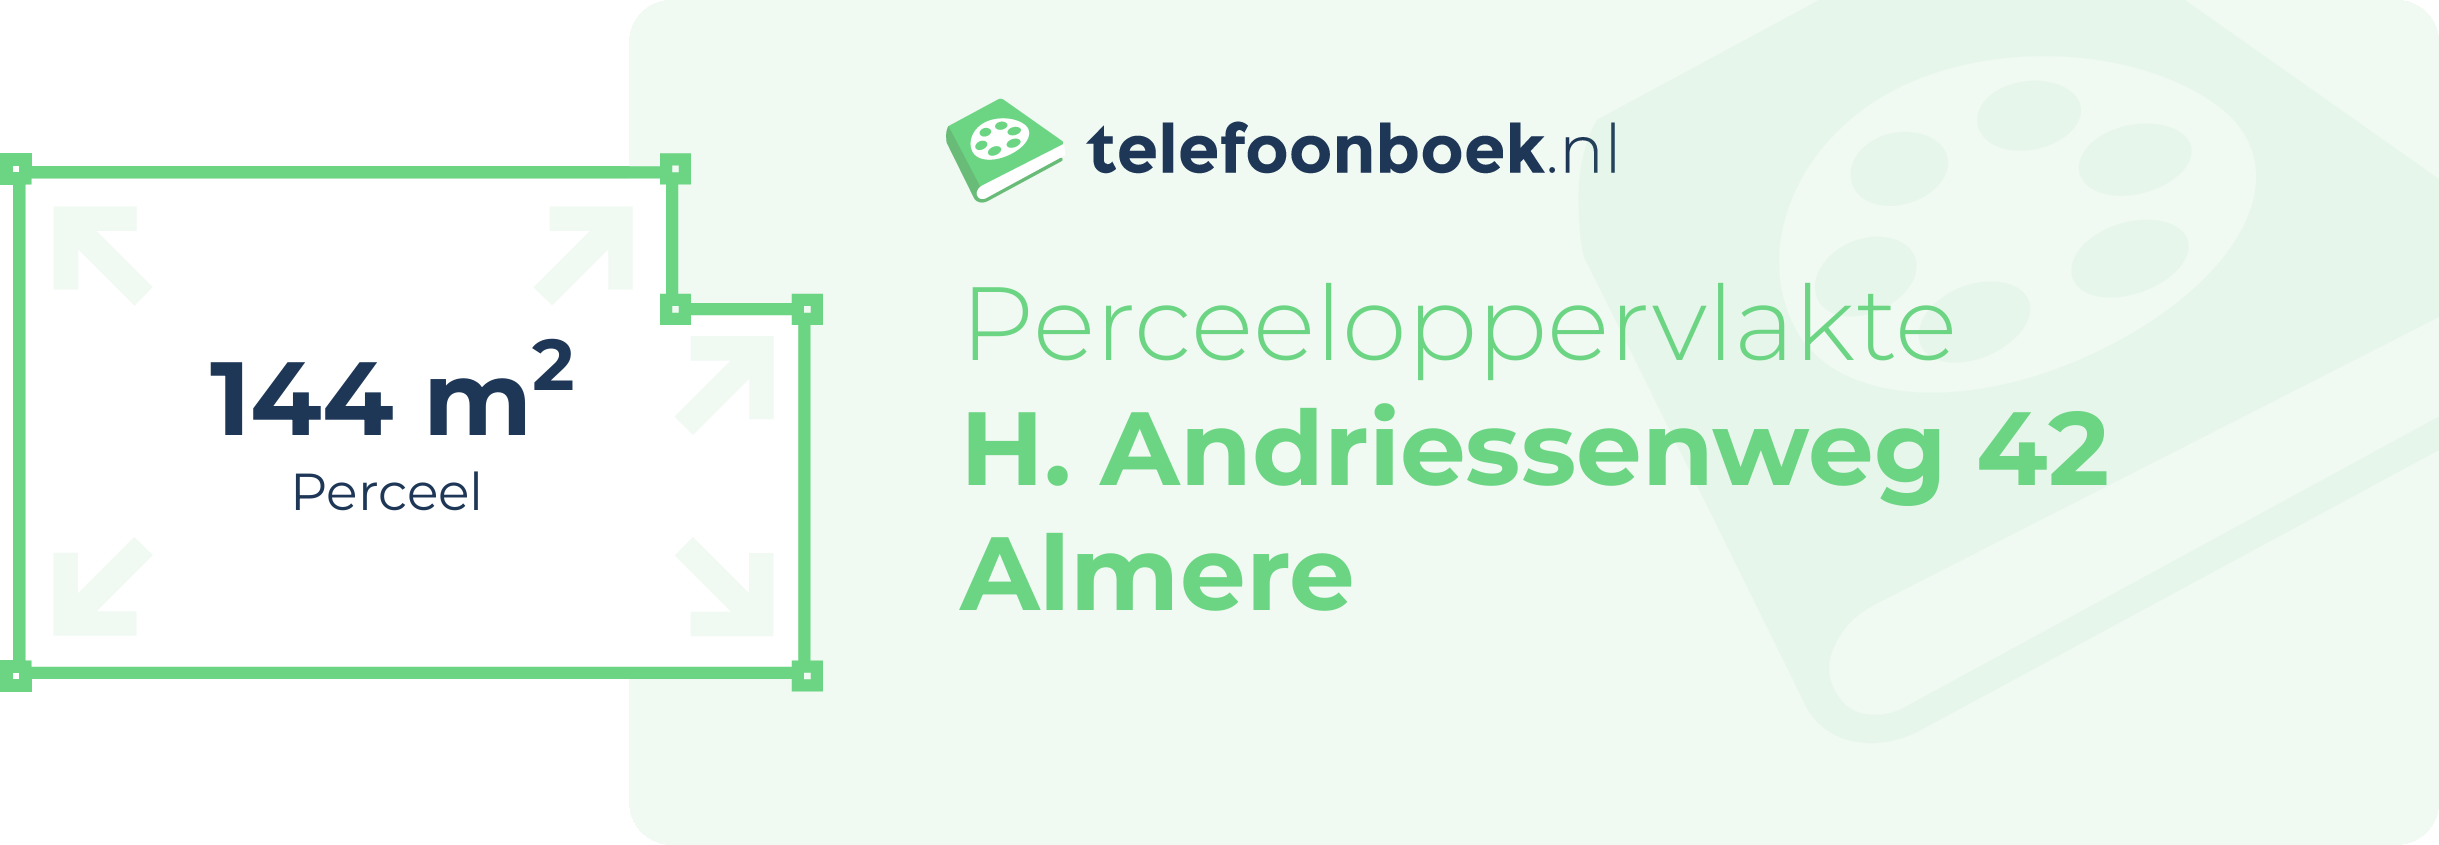 Perceeloppervlakte H. Andriessenweg 42 Almere